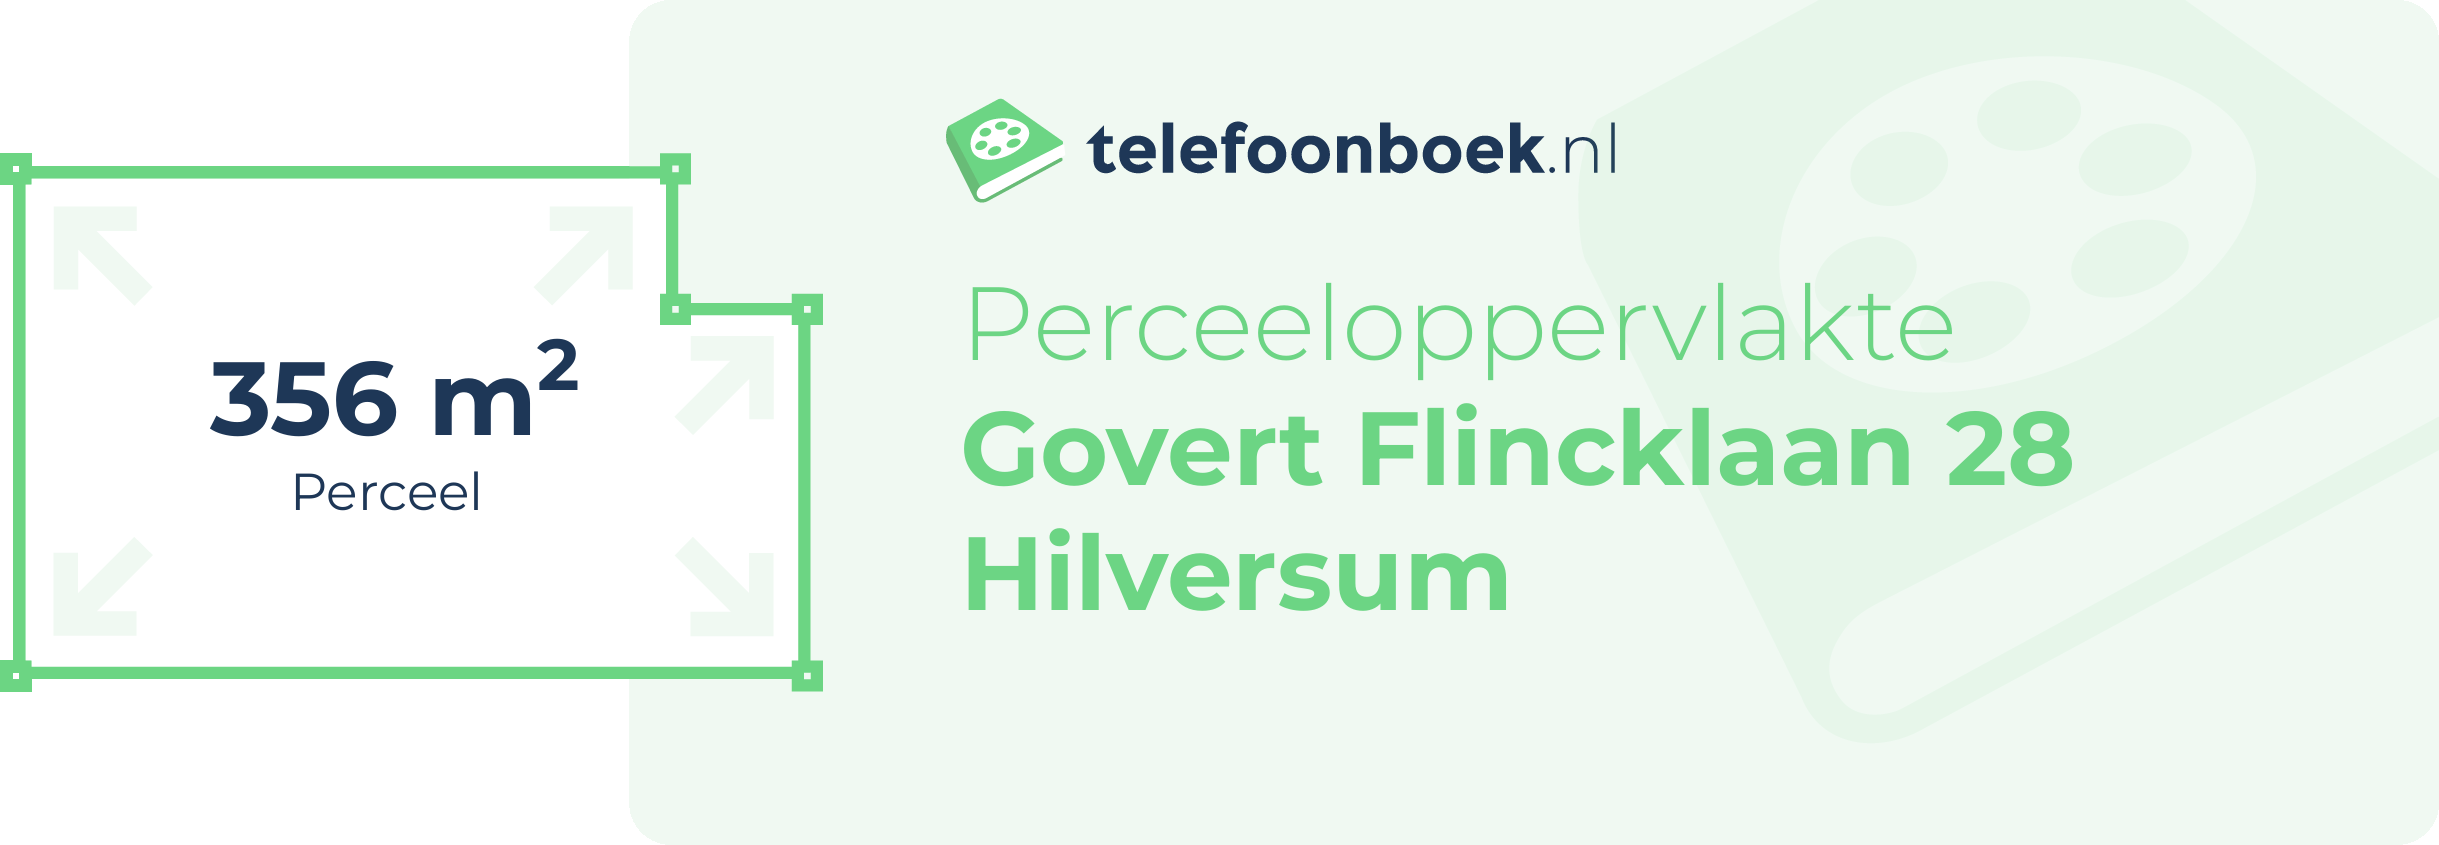 Perceeloppervlakte Govert Flincklaan 28 Hilversum